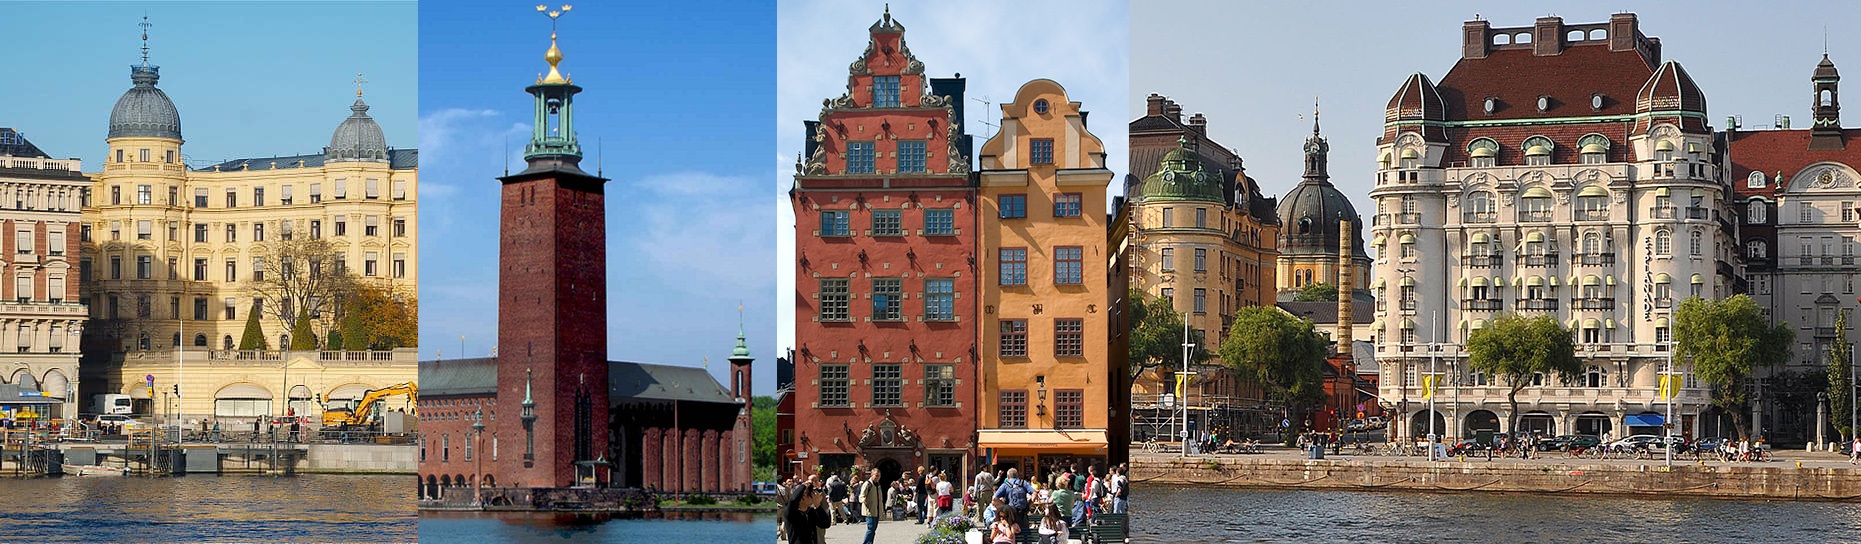 Finns Sveriges vackraste byggnad i Stockholm?